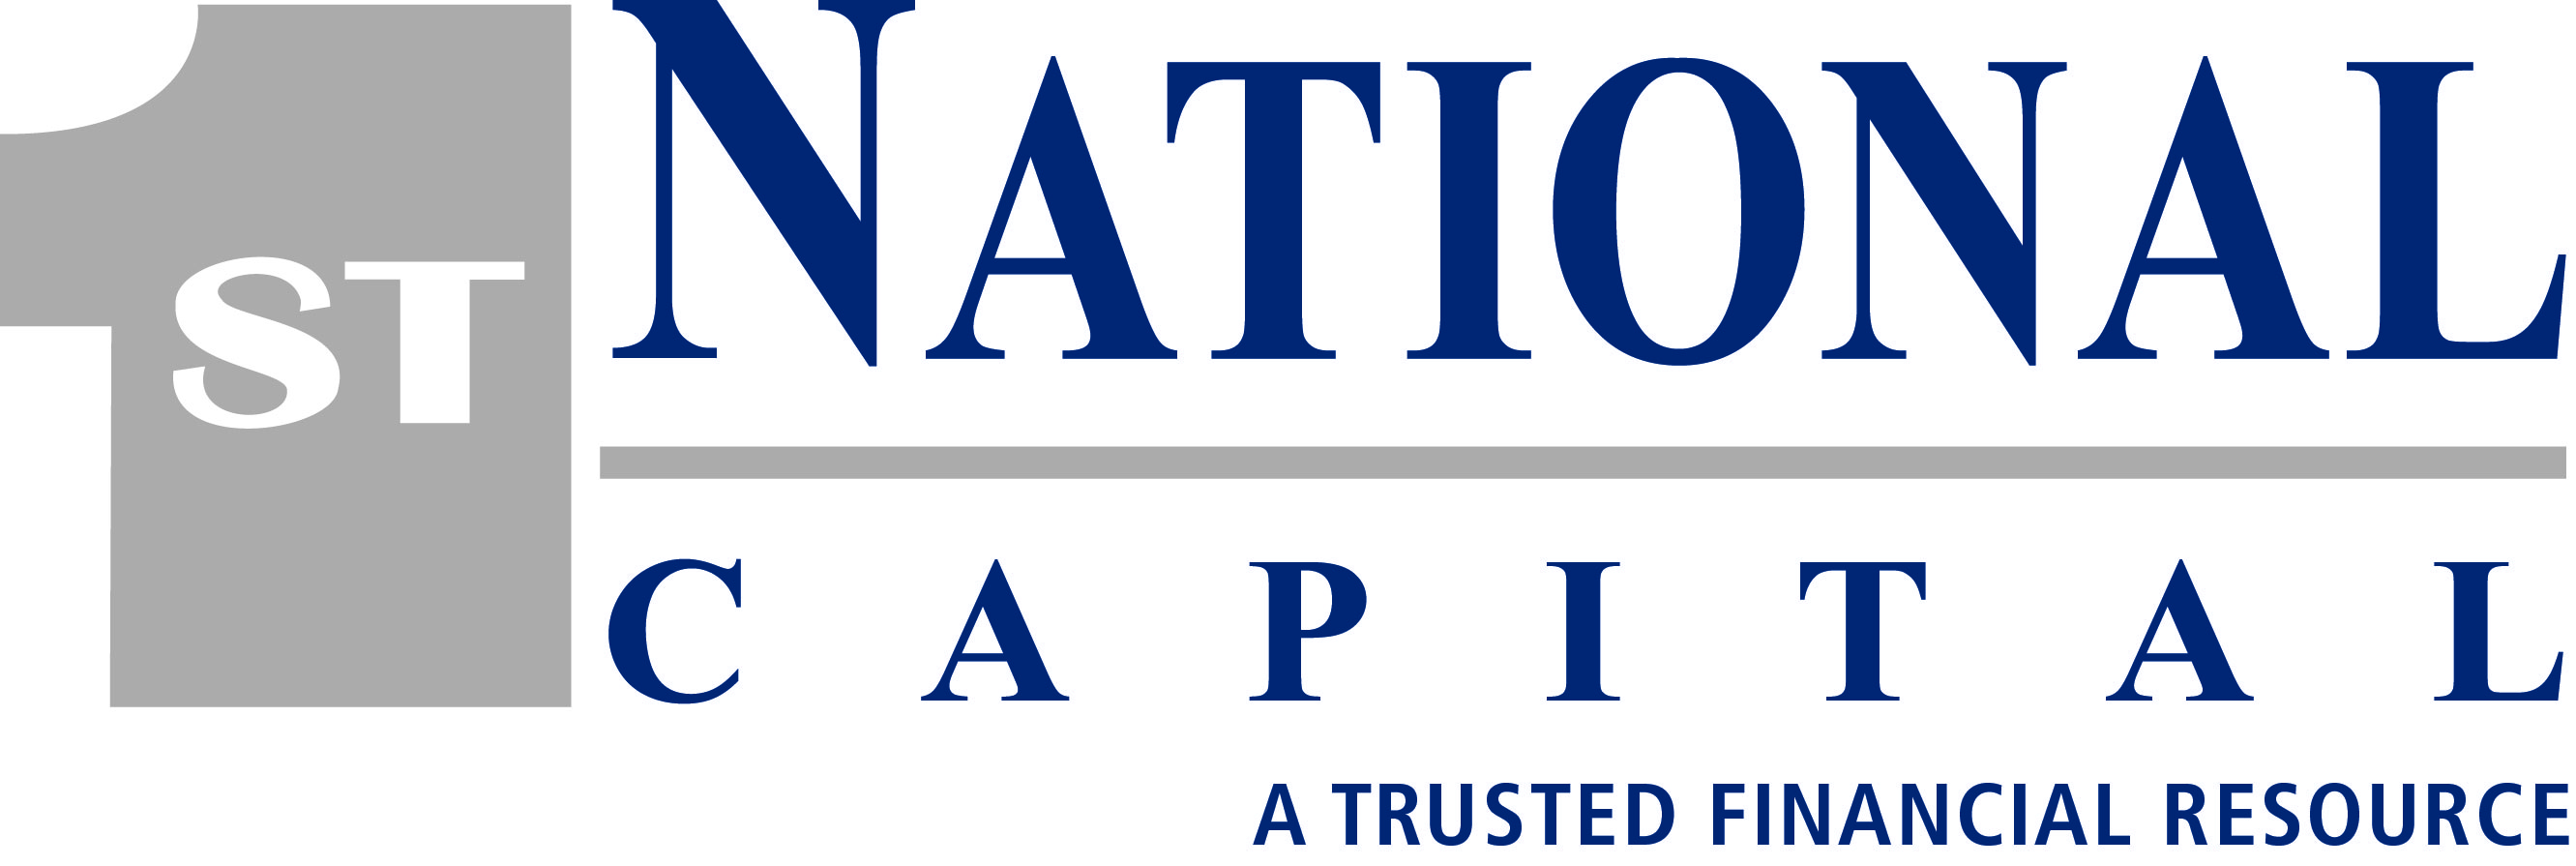 First National Capital, Corporation logo